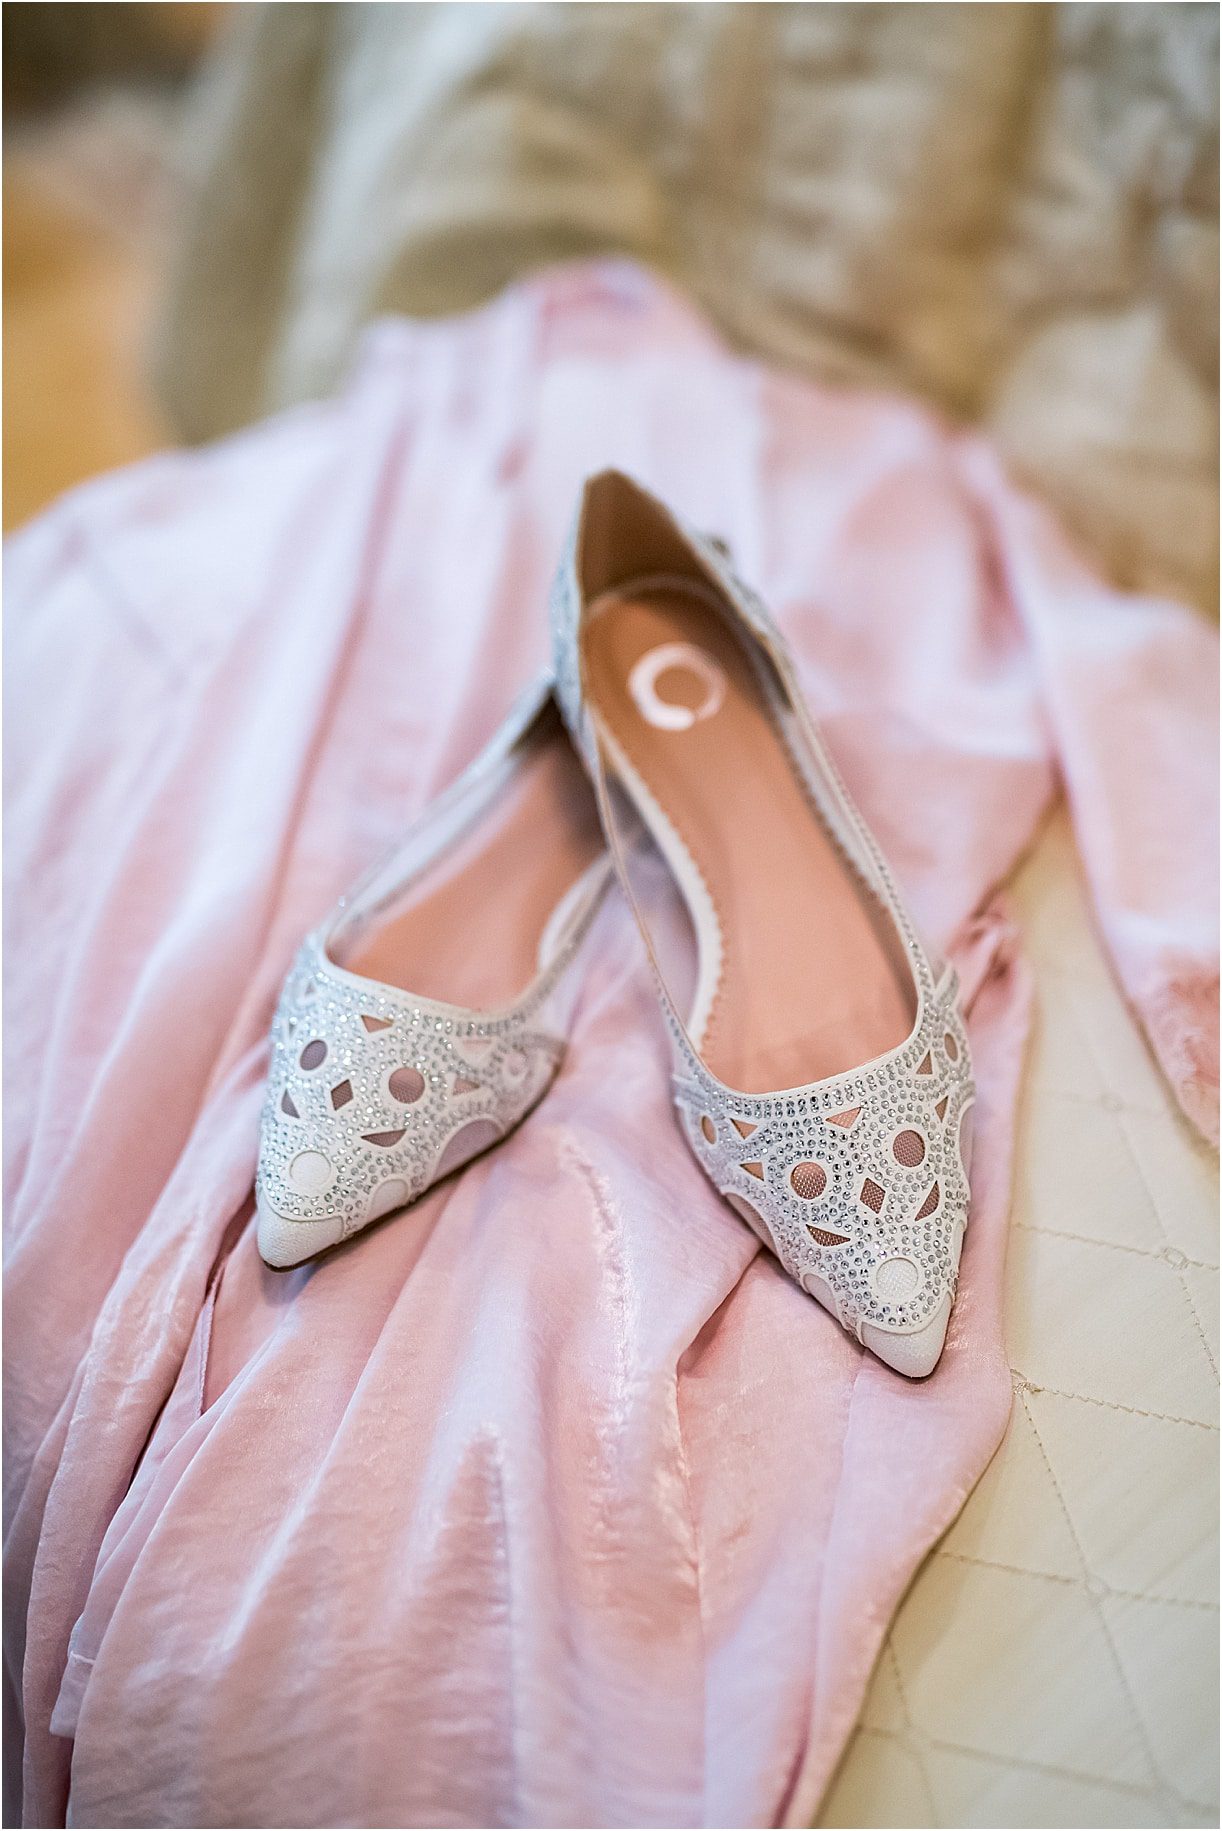 Bridal Shoes | Drive In Wedding Ideas | COVID Wedding Ceremony Ideas | Hill City Bride Virginia Weddings